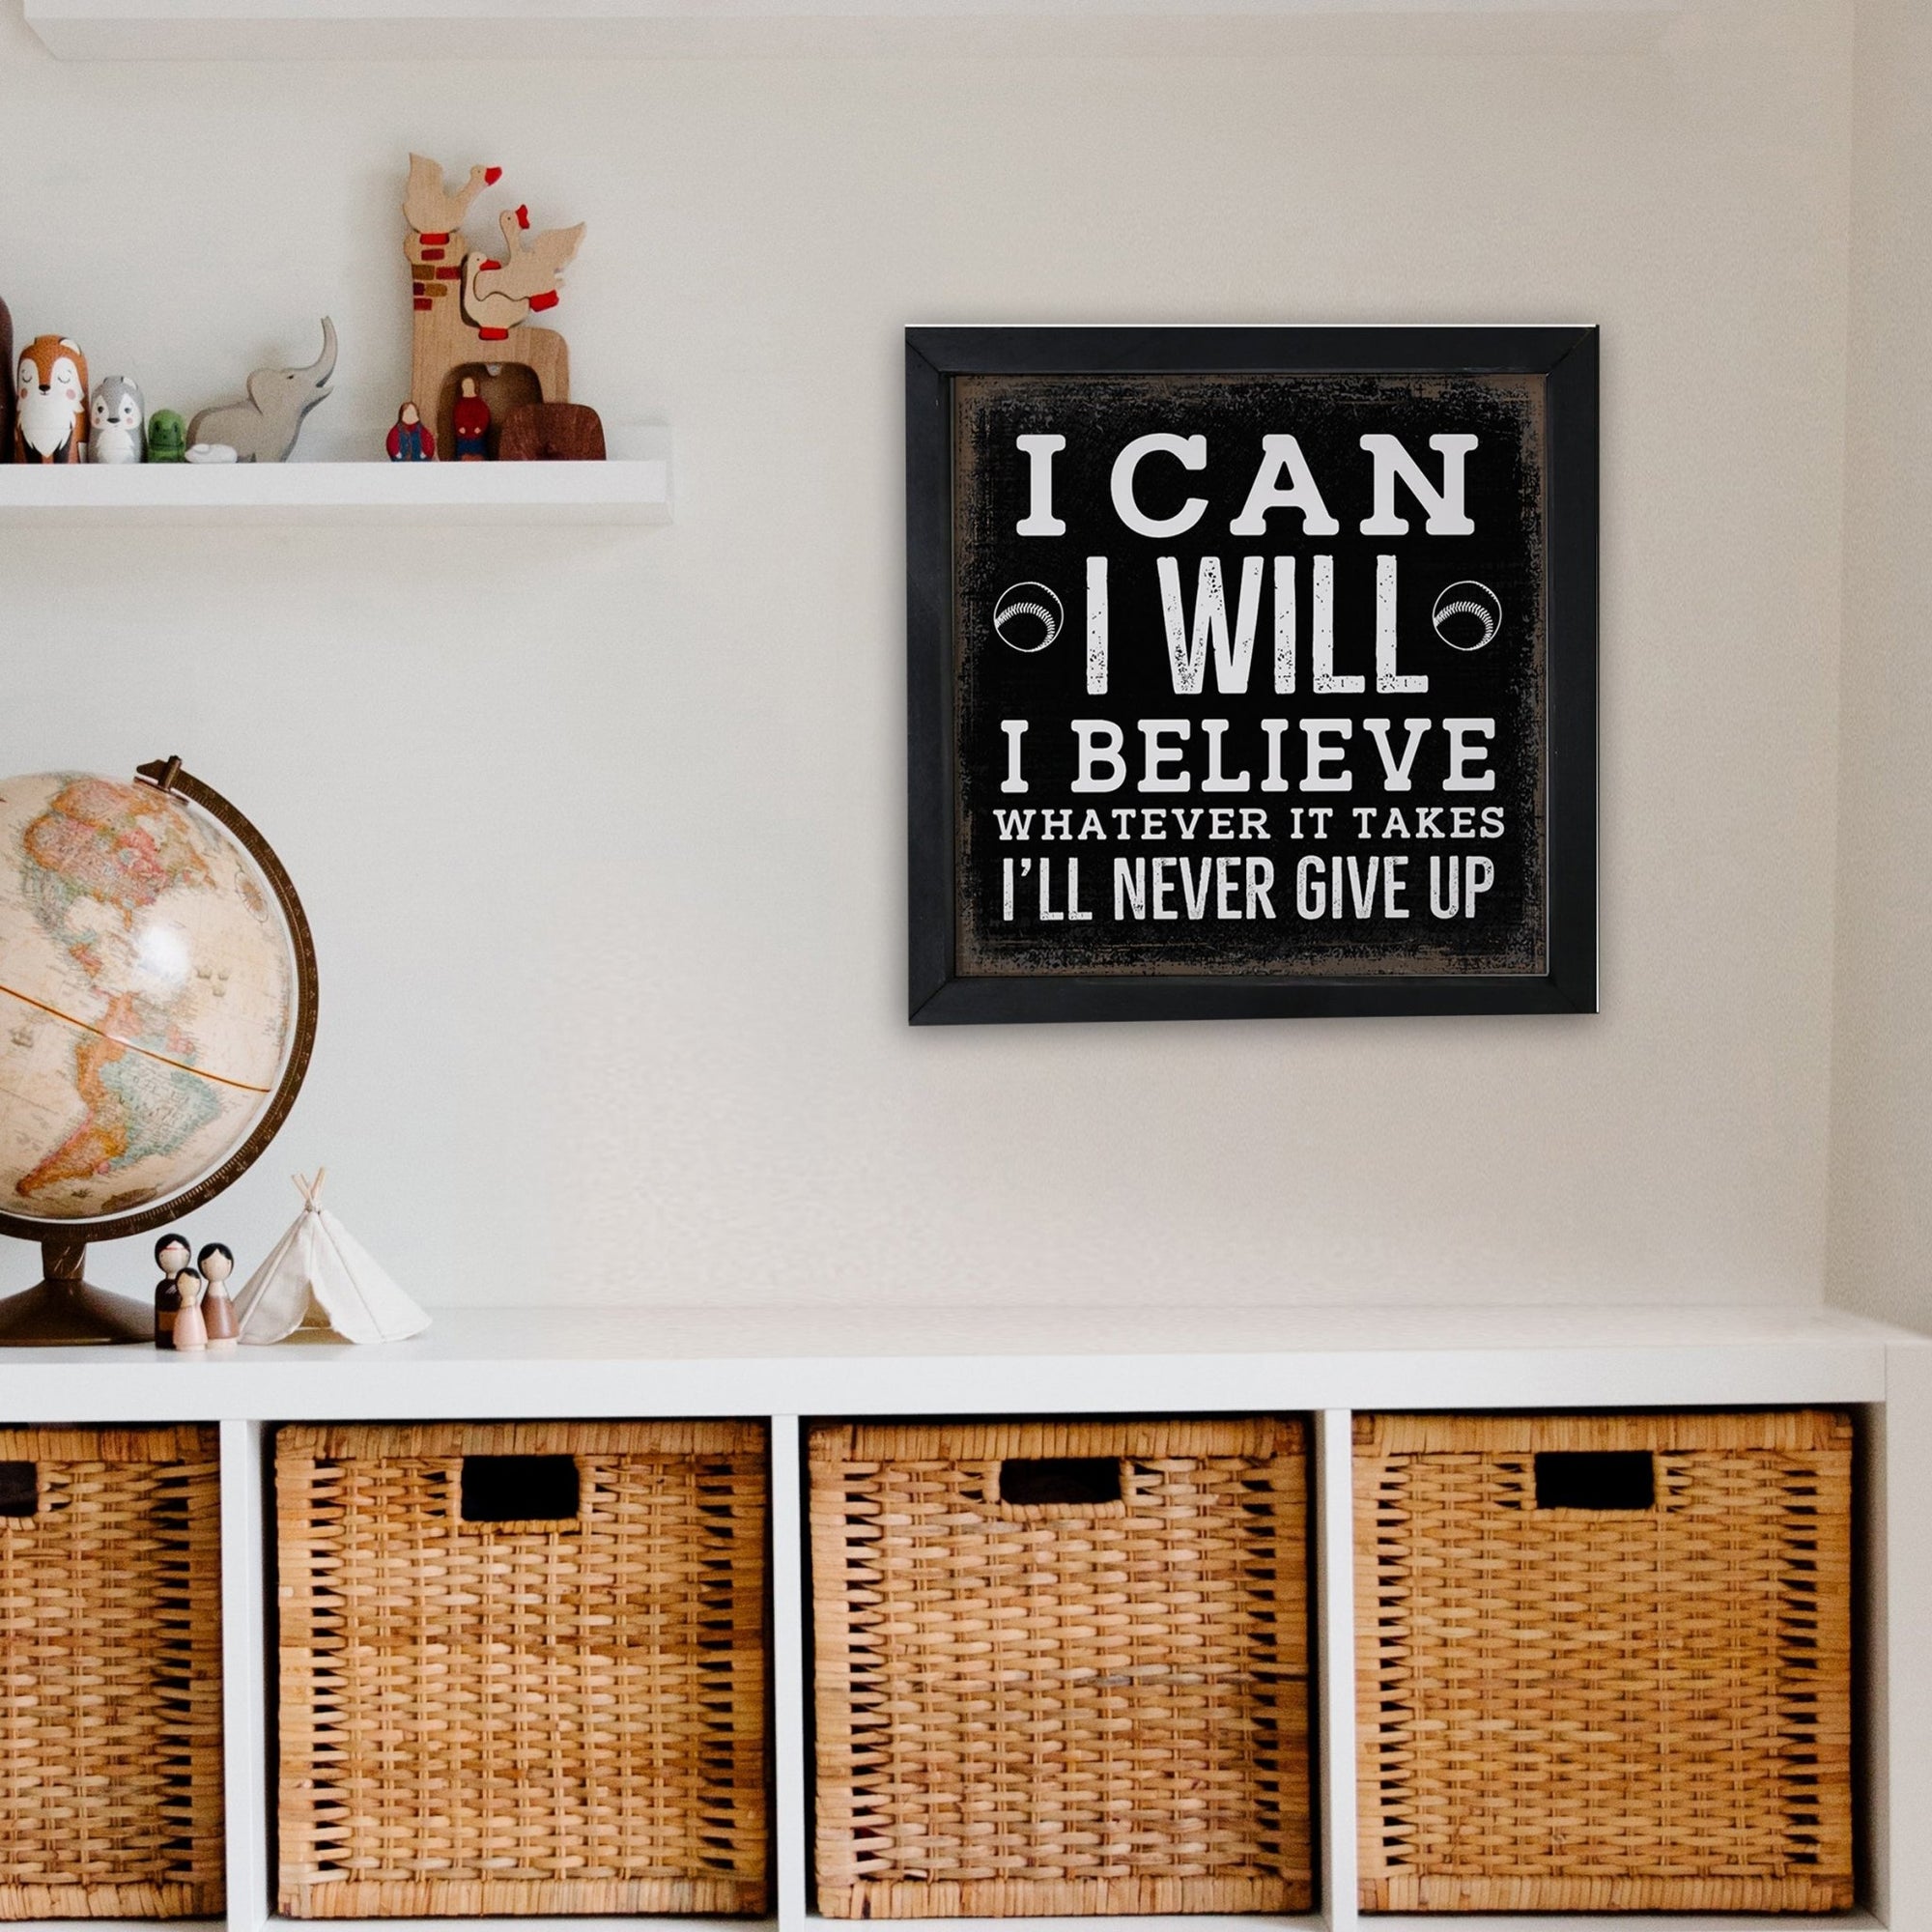 Elegant Baseball Framed Shadow Box Shelf Décor With Inspiring Bible Verses - I Can, I Will - LifeSong Milestones